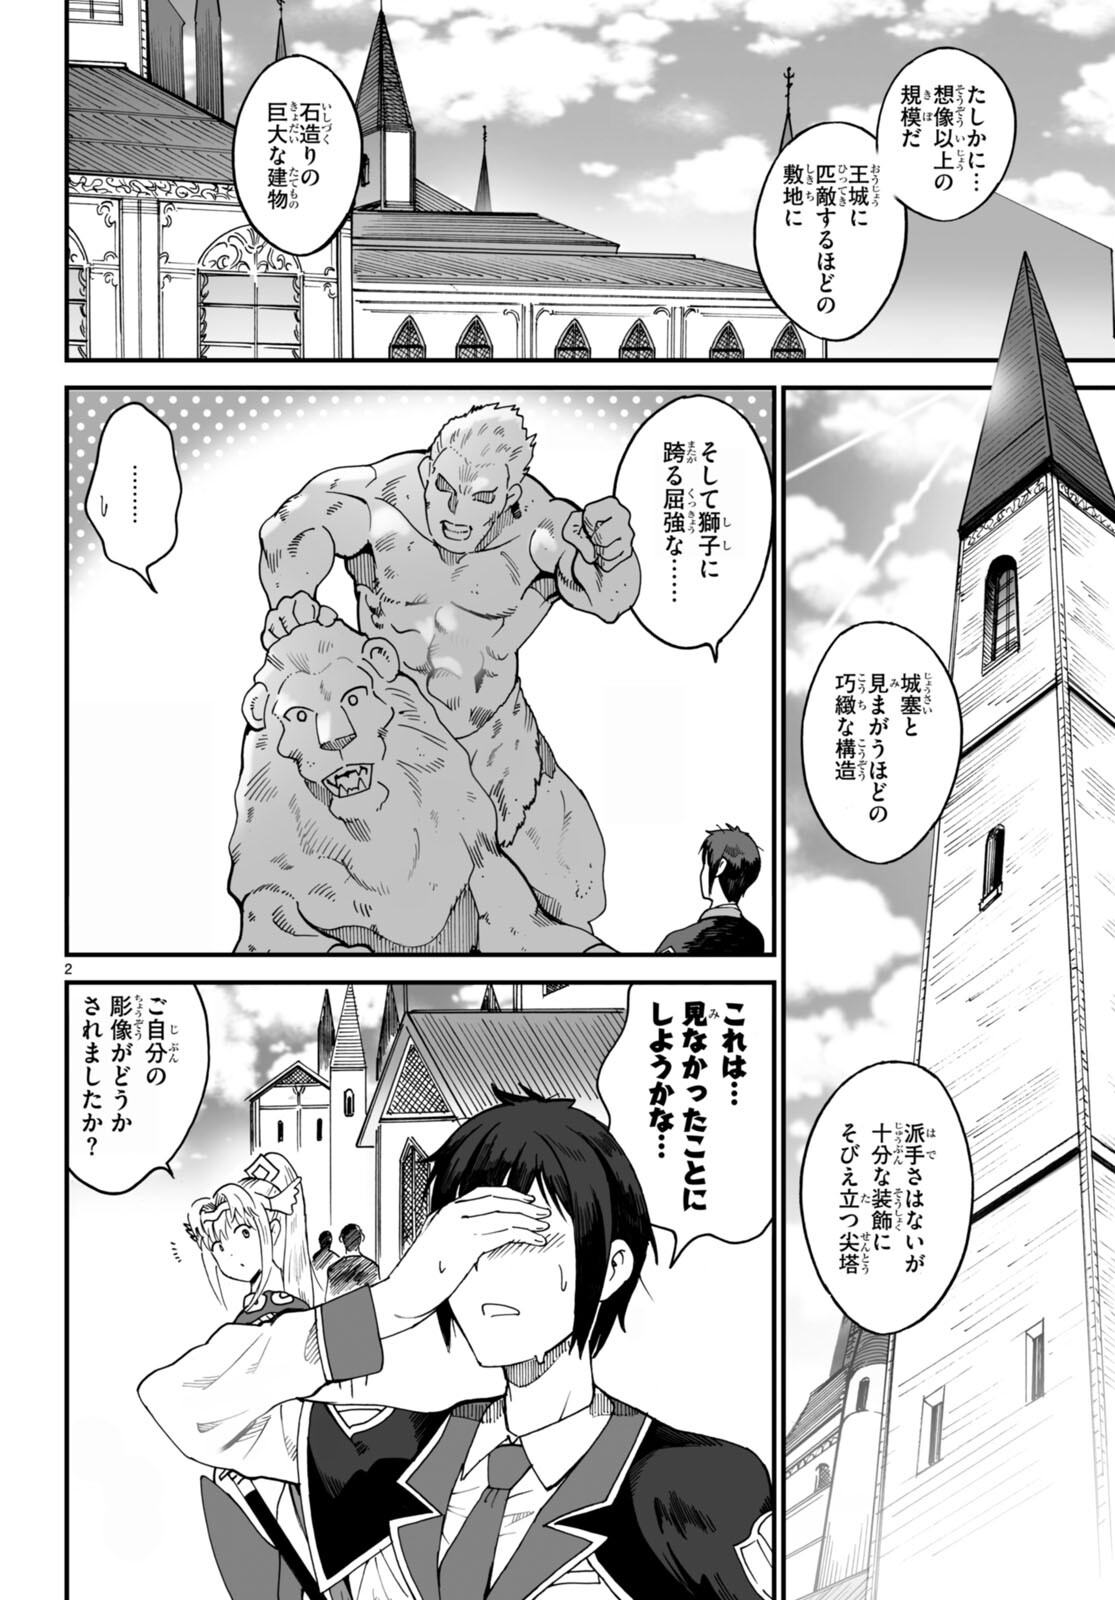 Densetsu no Ore - Chapter 6 - Page 2